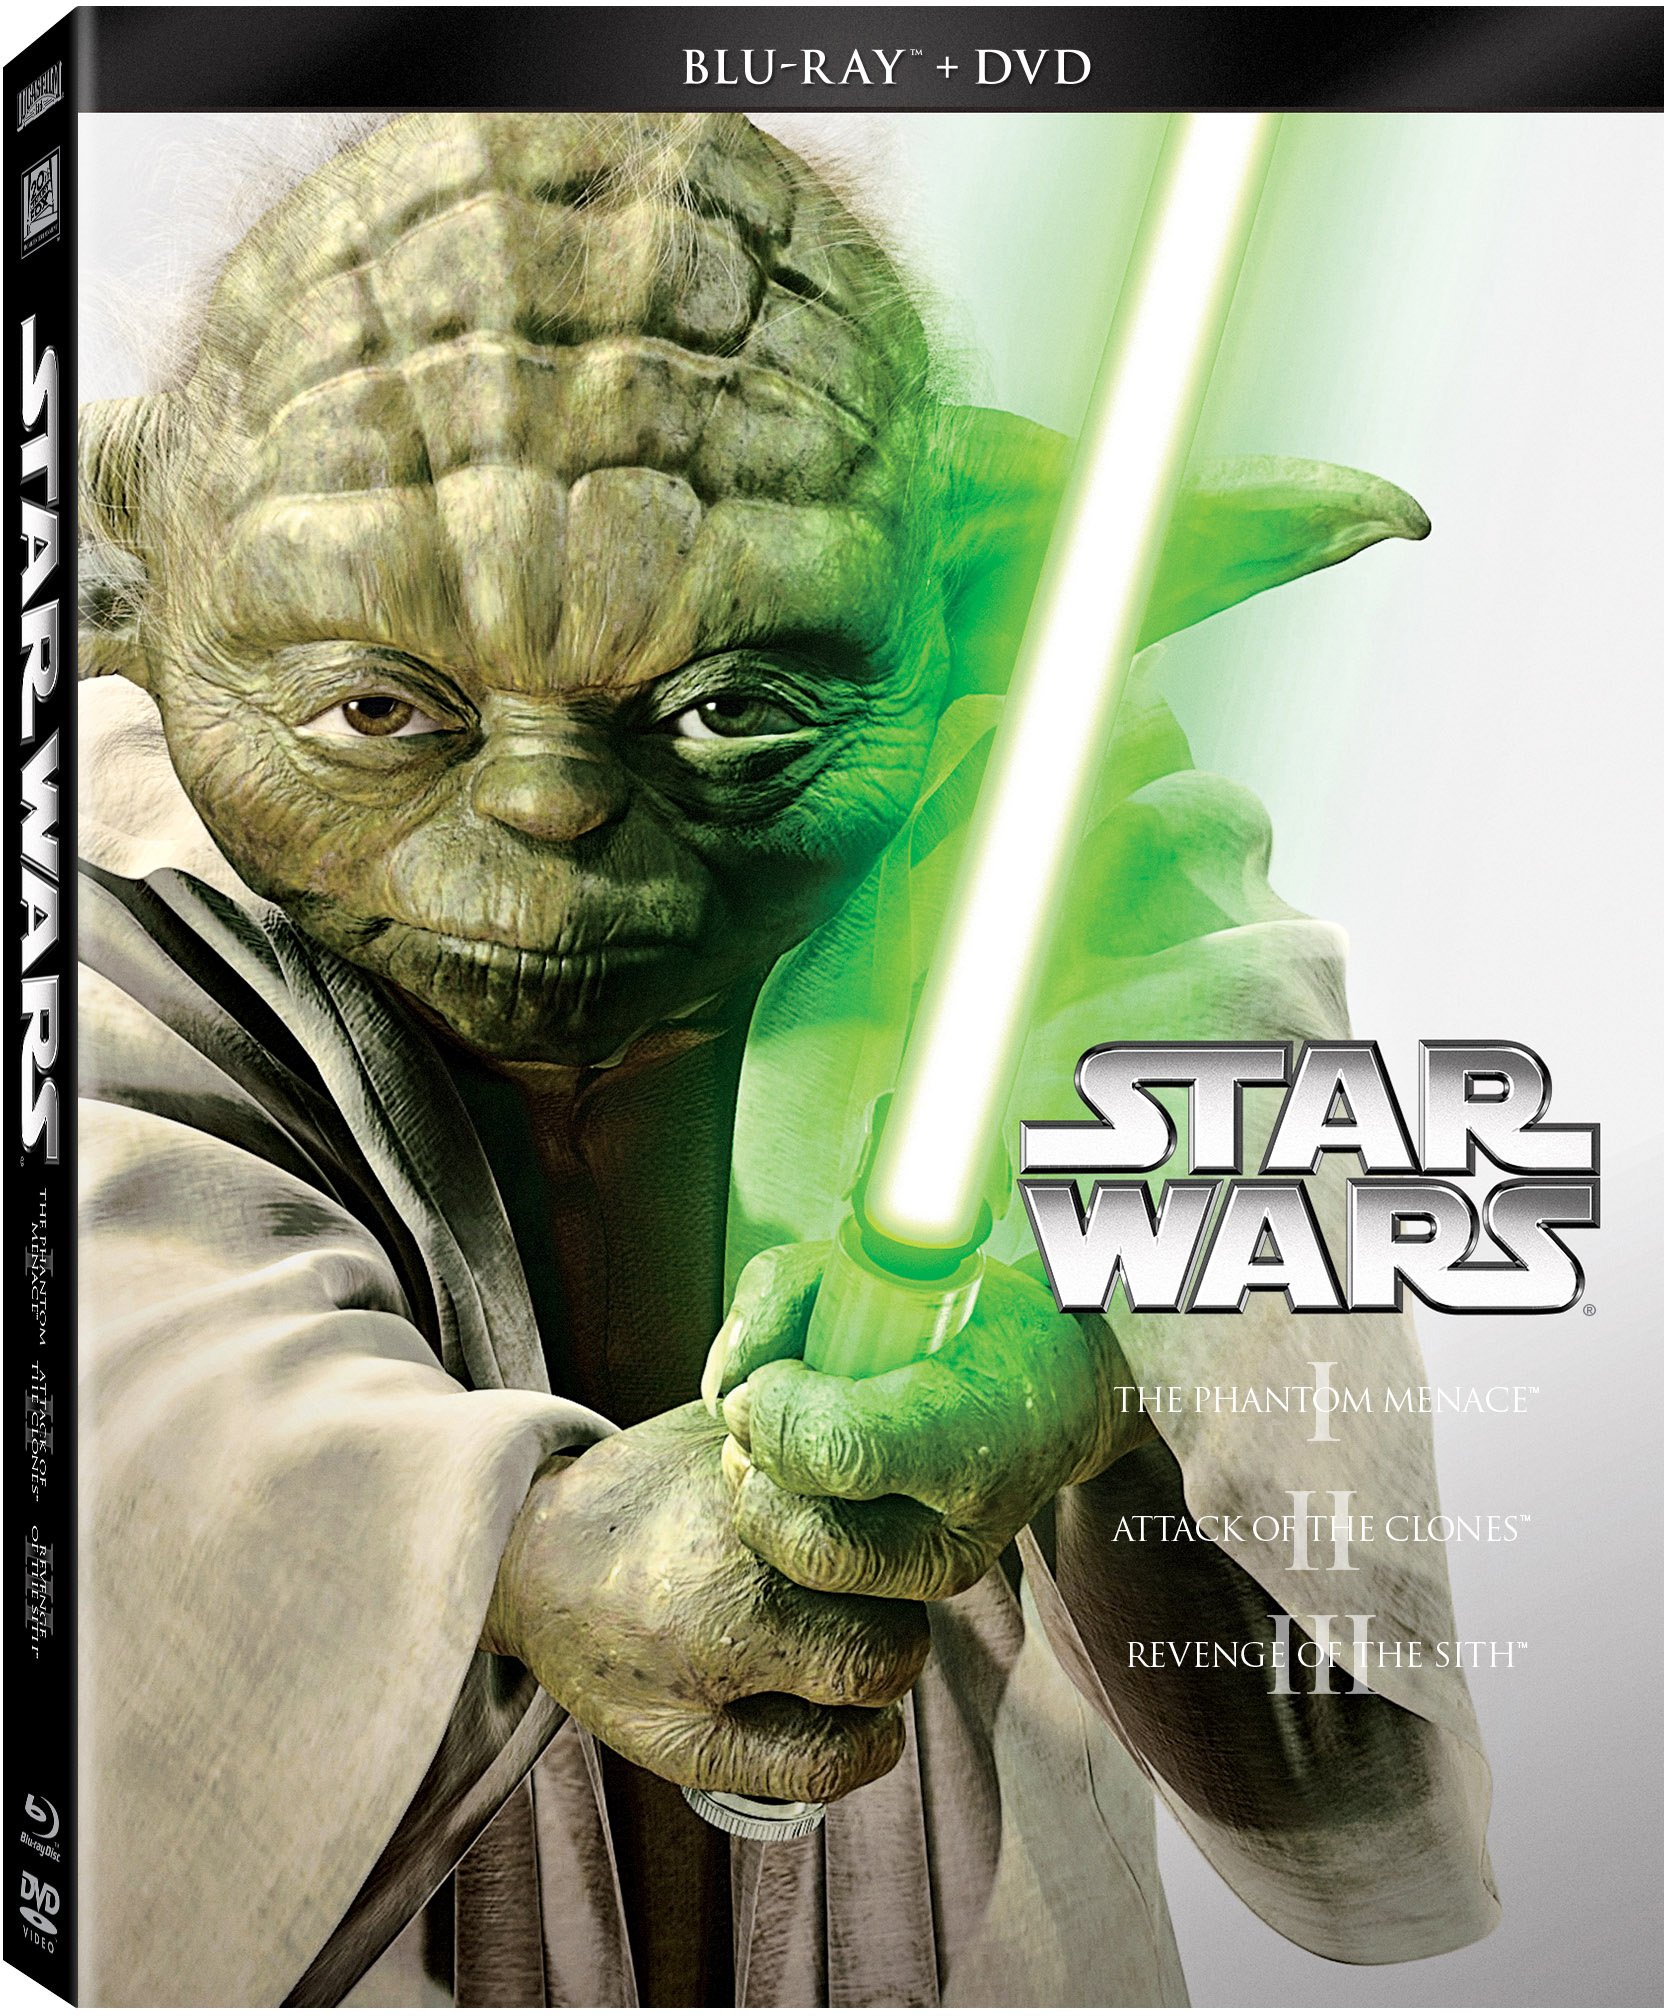 modo Nos vemos mañana folleto Star Wars: Episode III - Revenge of the Sith DVD Release Date